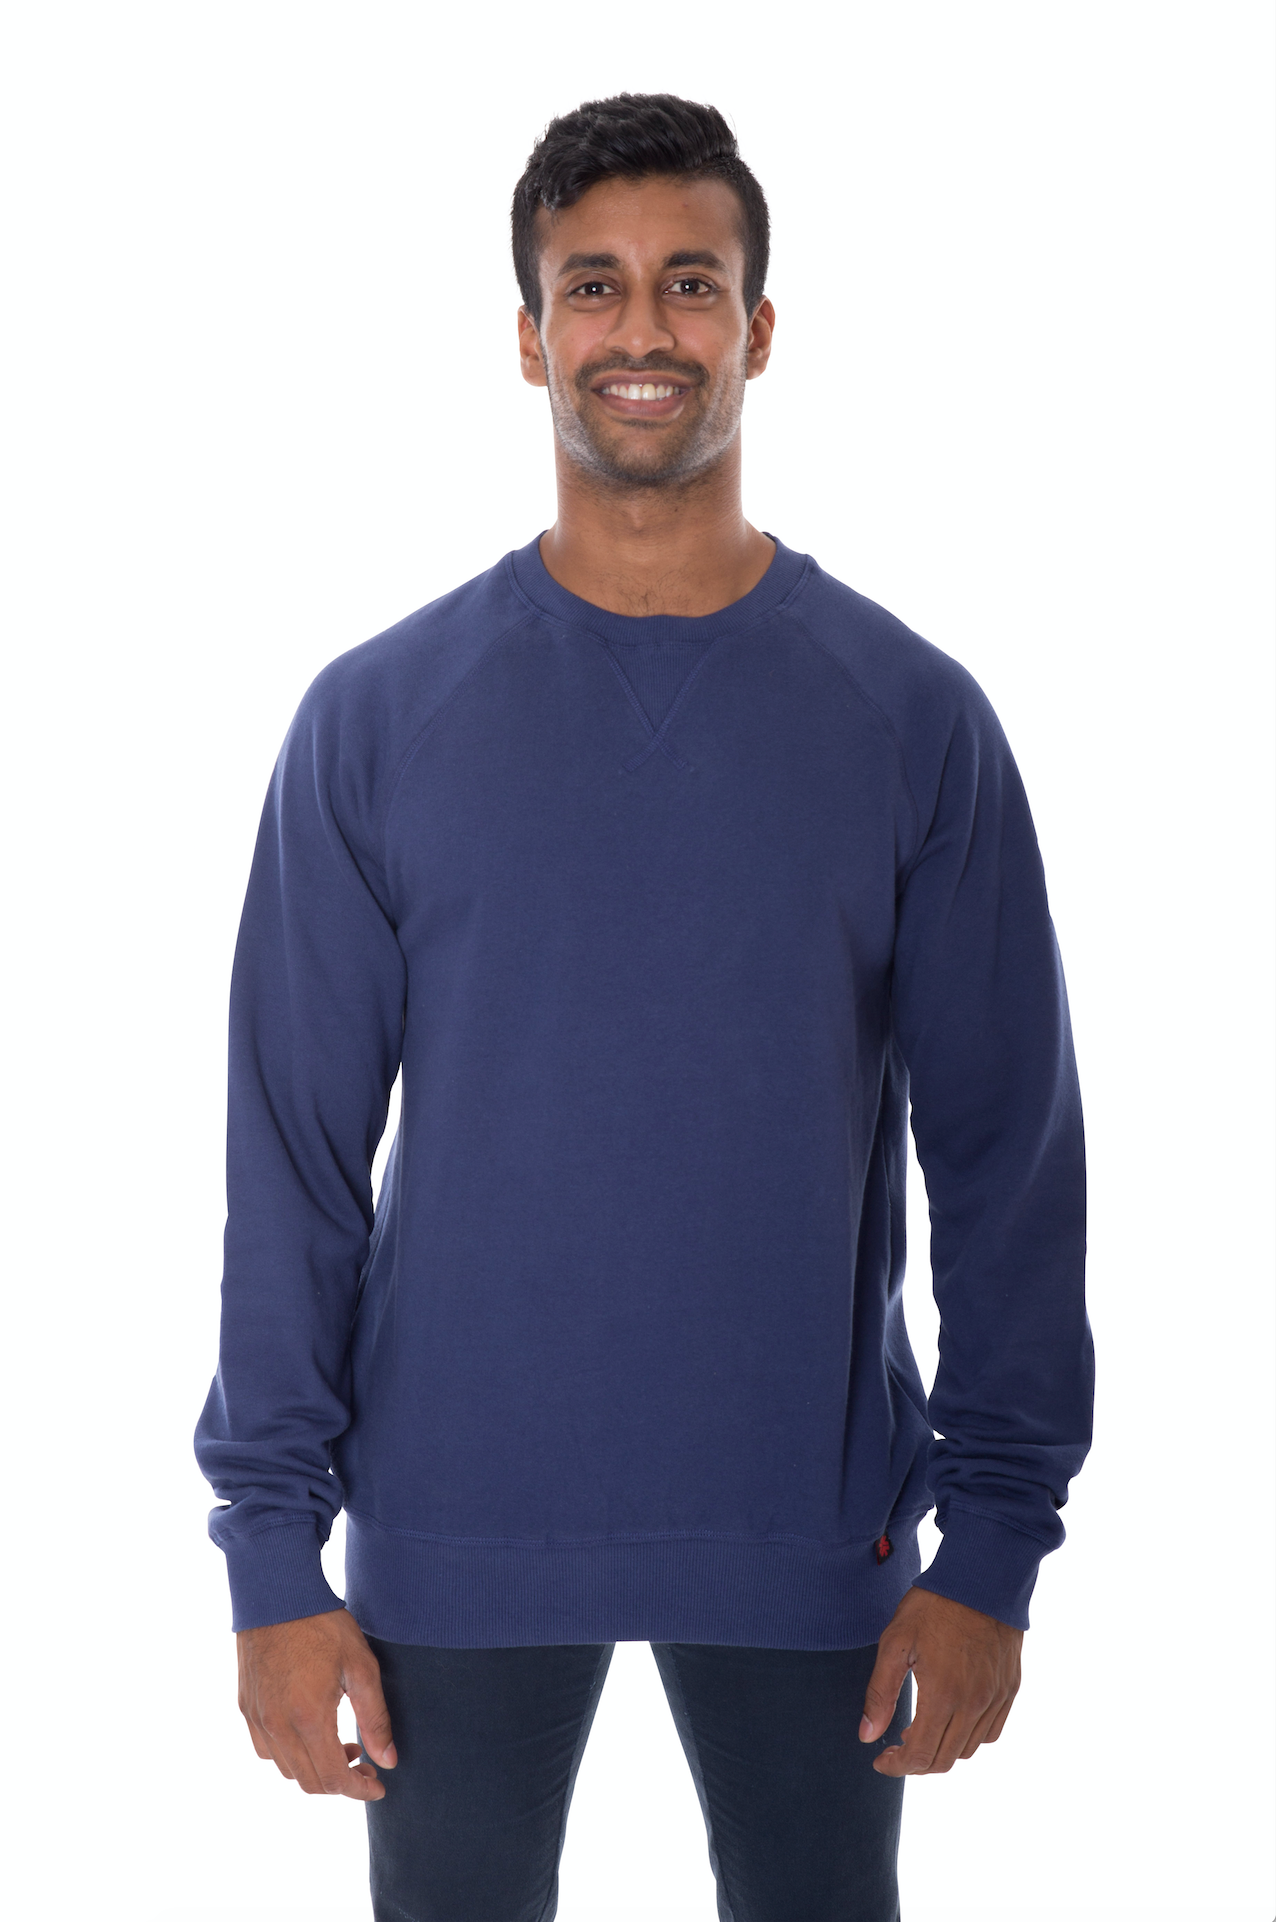 Crew Neck Sweatshirt at Cotton Traders